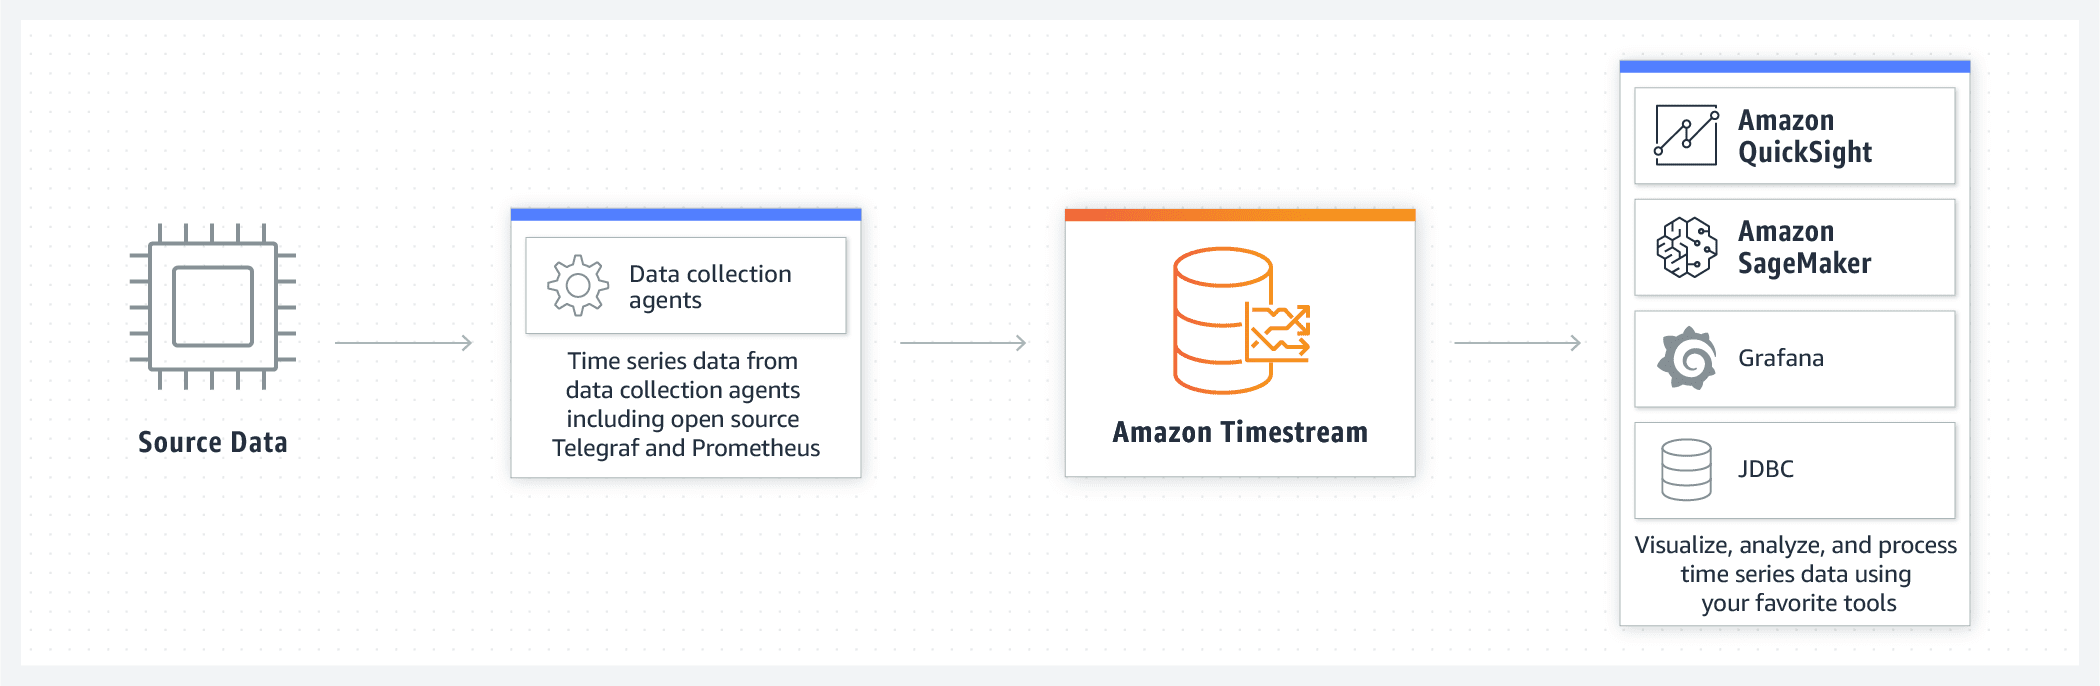 Amazon Timestream Use Cases